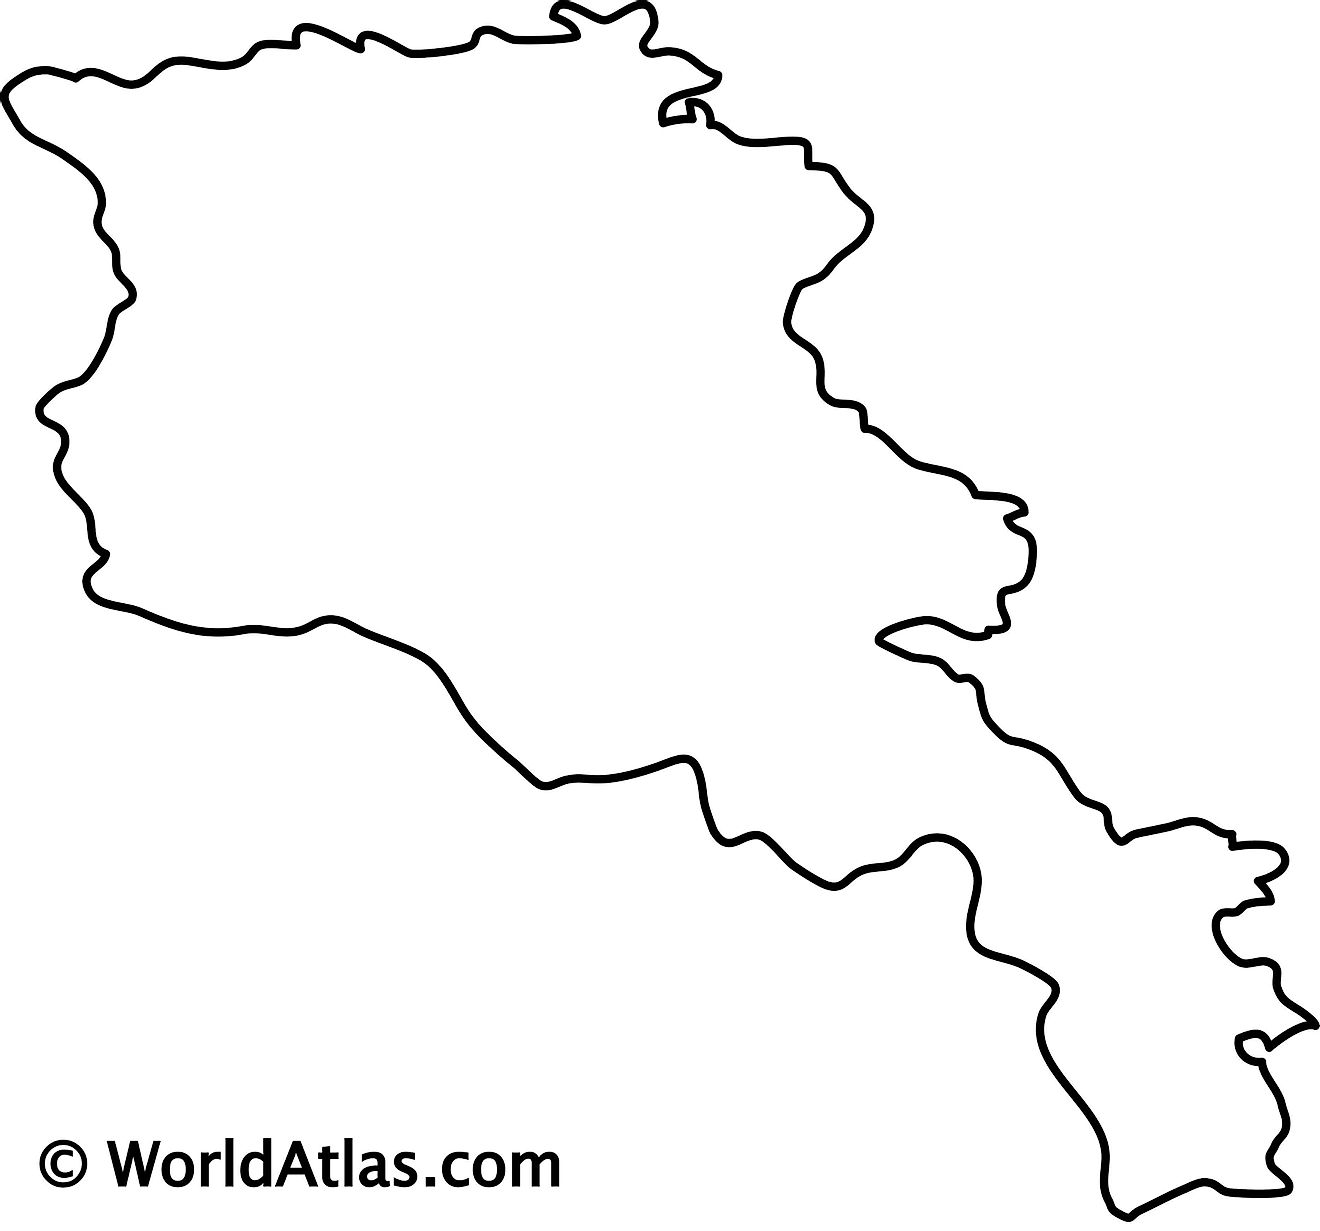 Blank Outline Map of Armenia